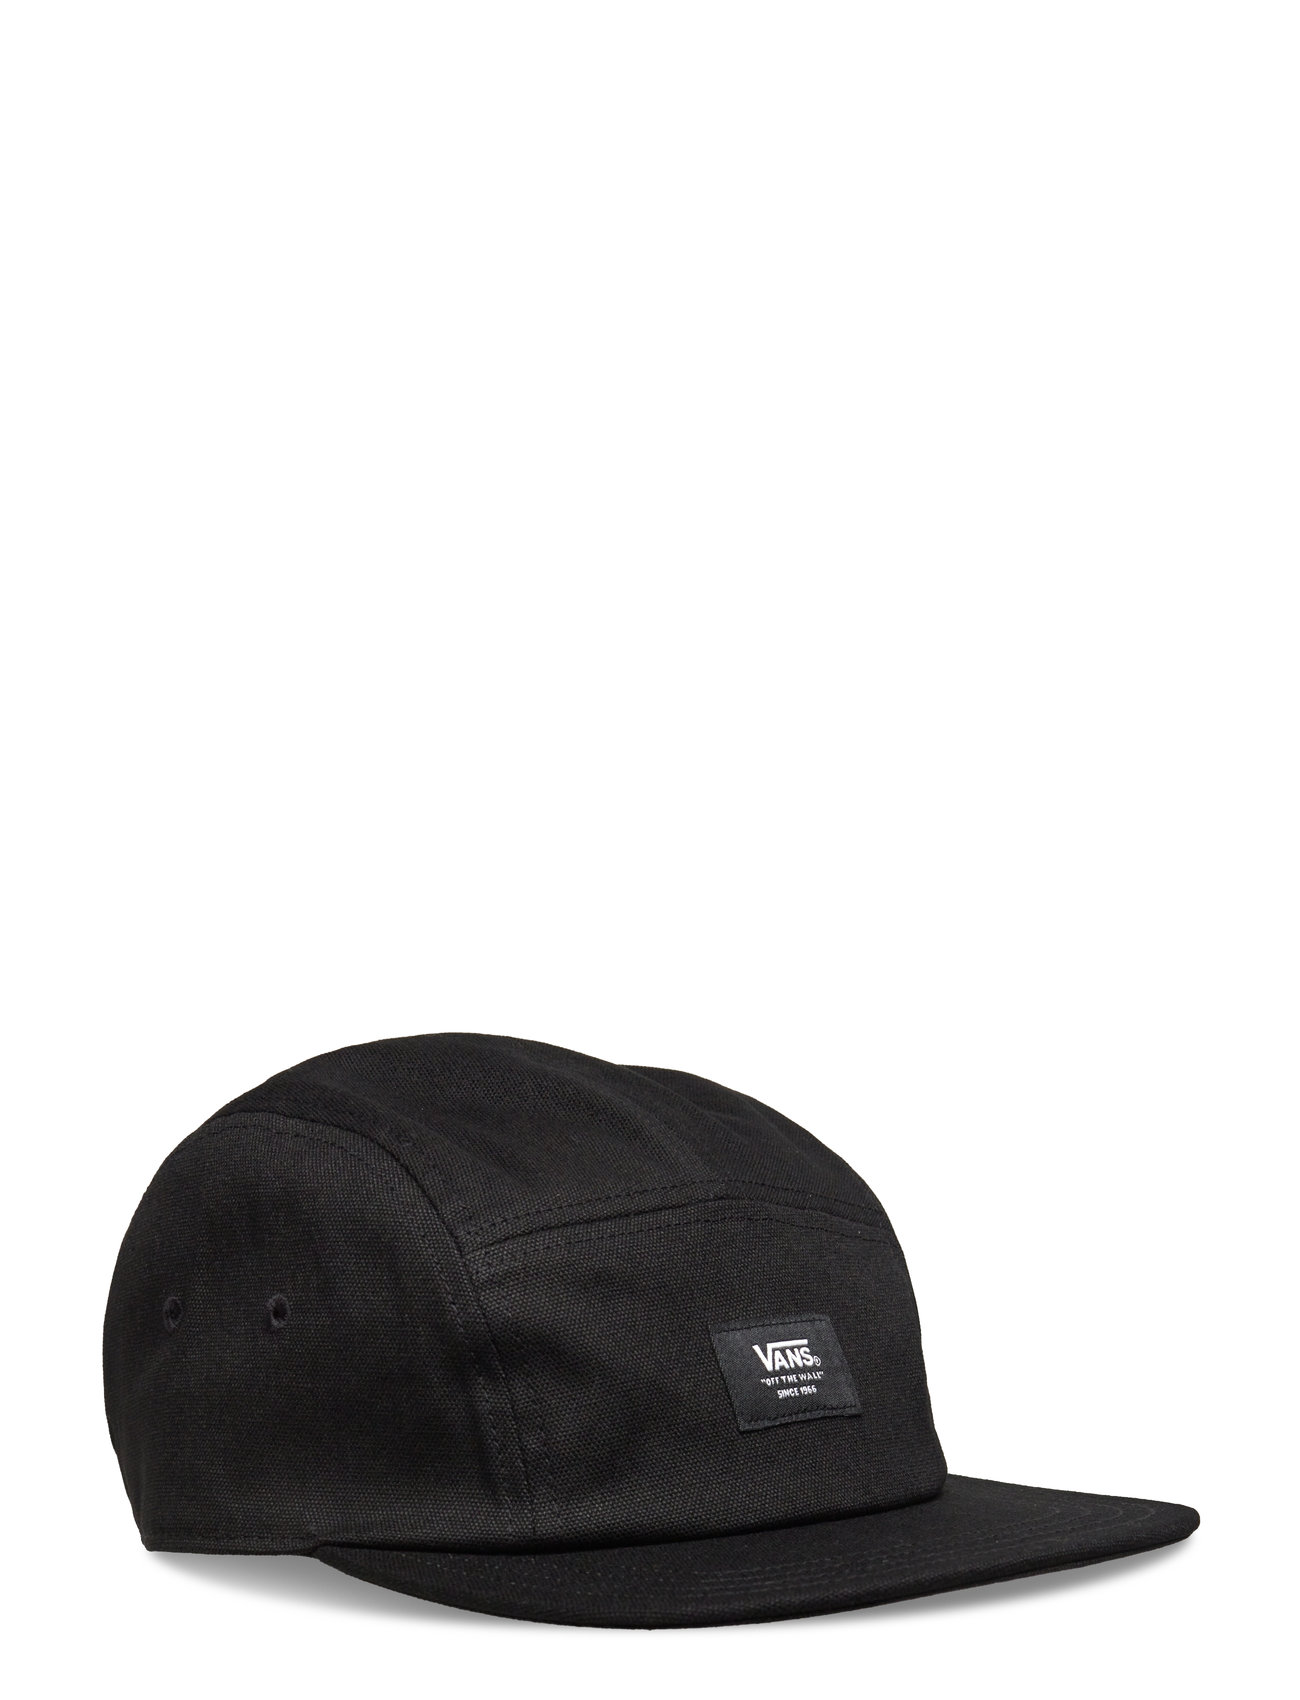 Easy Patch Camper Sport Headwear Caps Black VANS